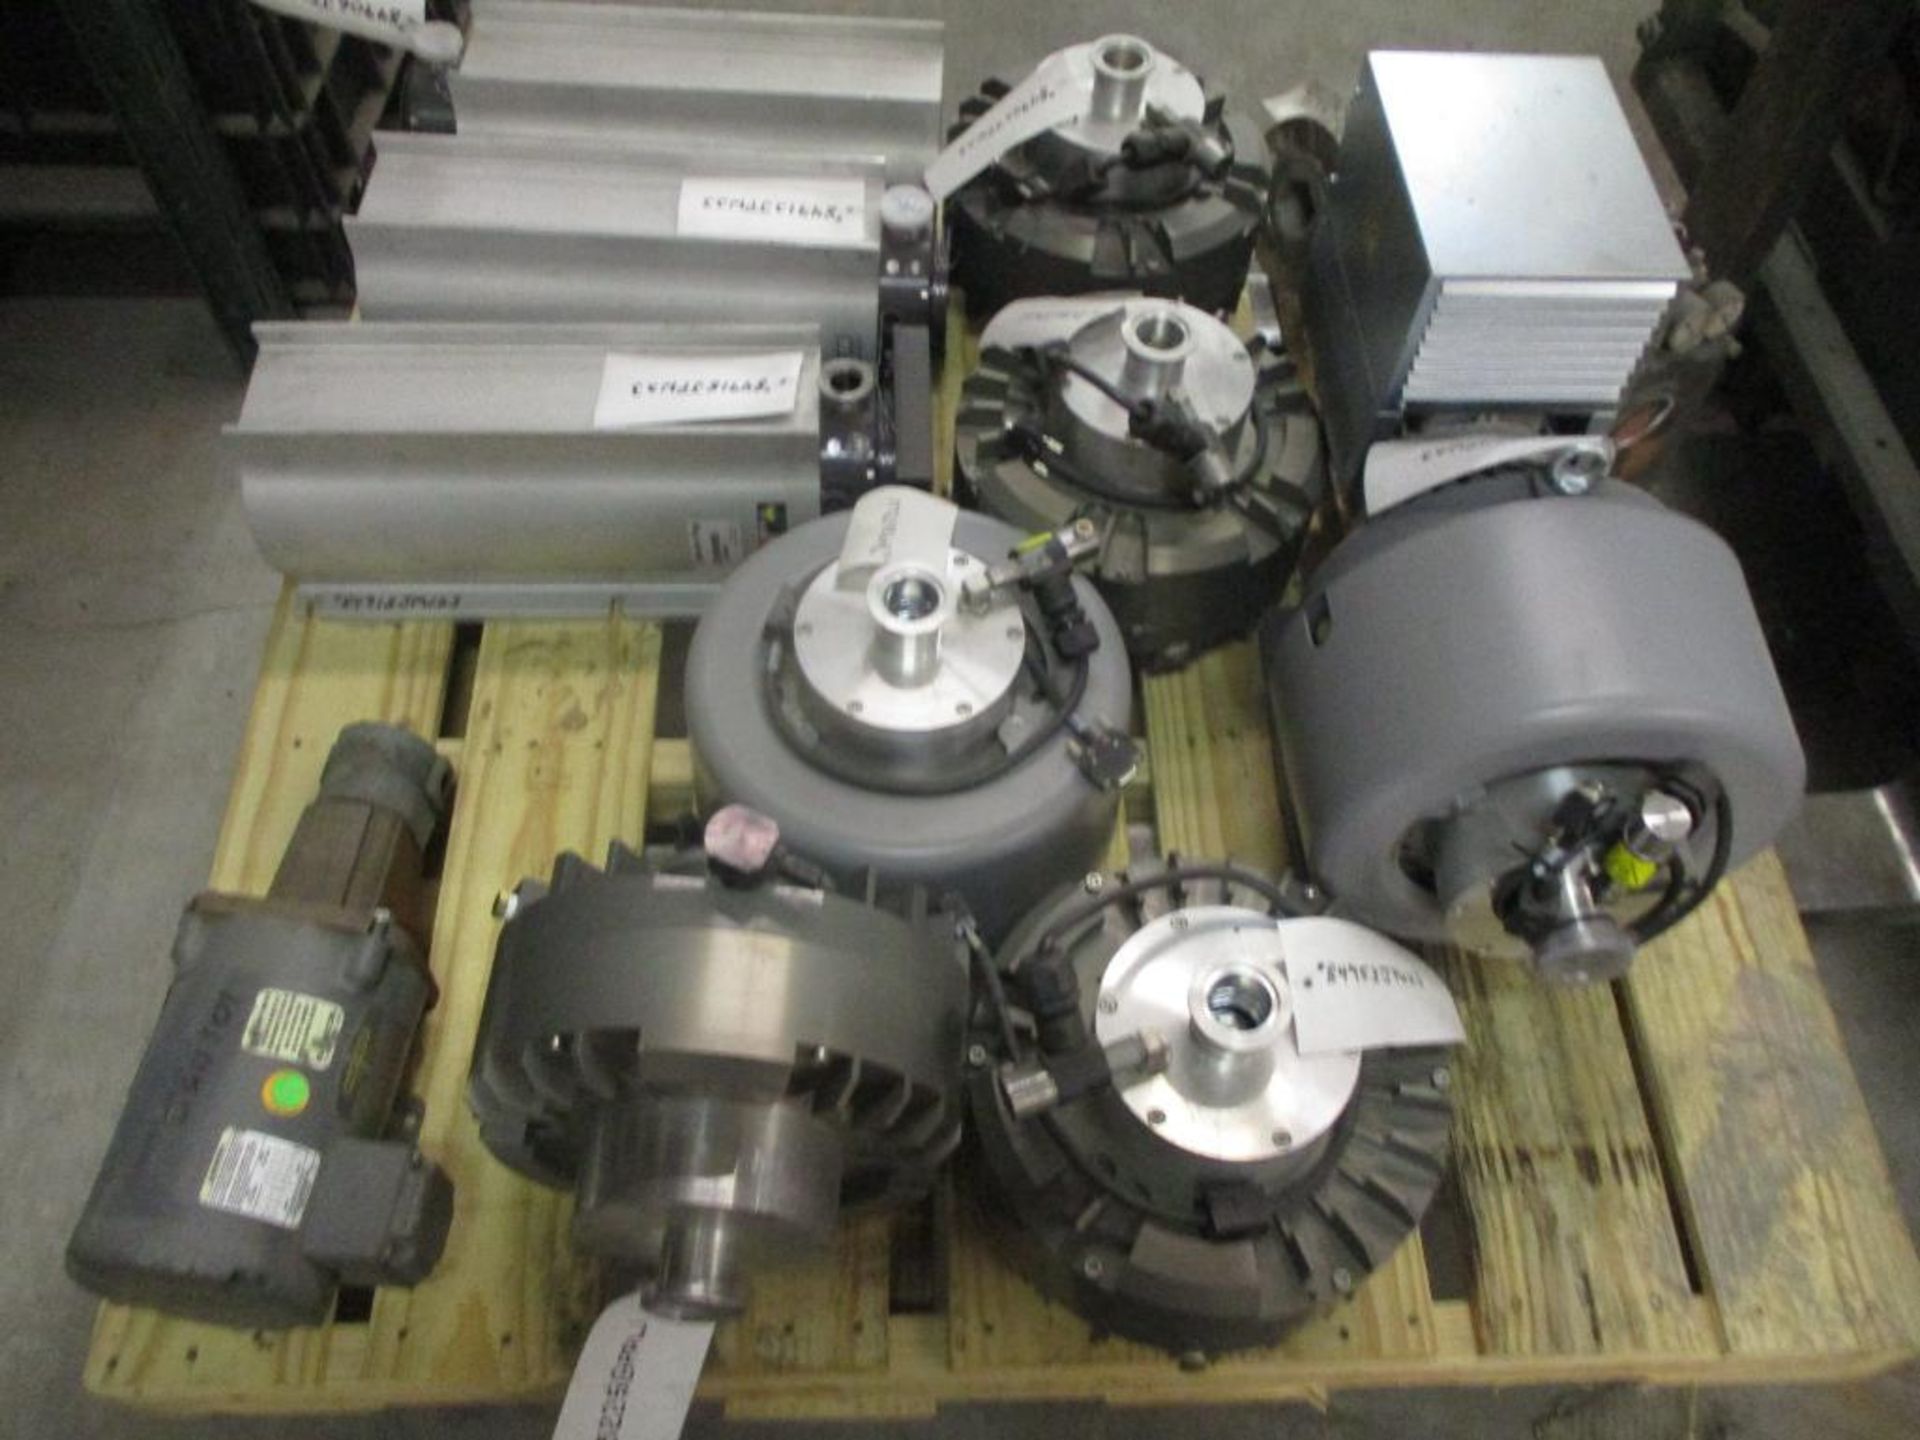 (5) Agilent Pump Module Assemblies, (3) Edwards Vacuum Pumps, (1) Agilent Dry Vacuum Pump, (1) Actua